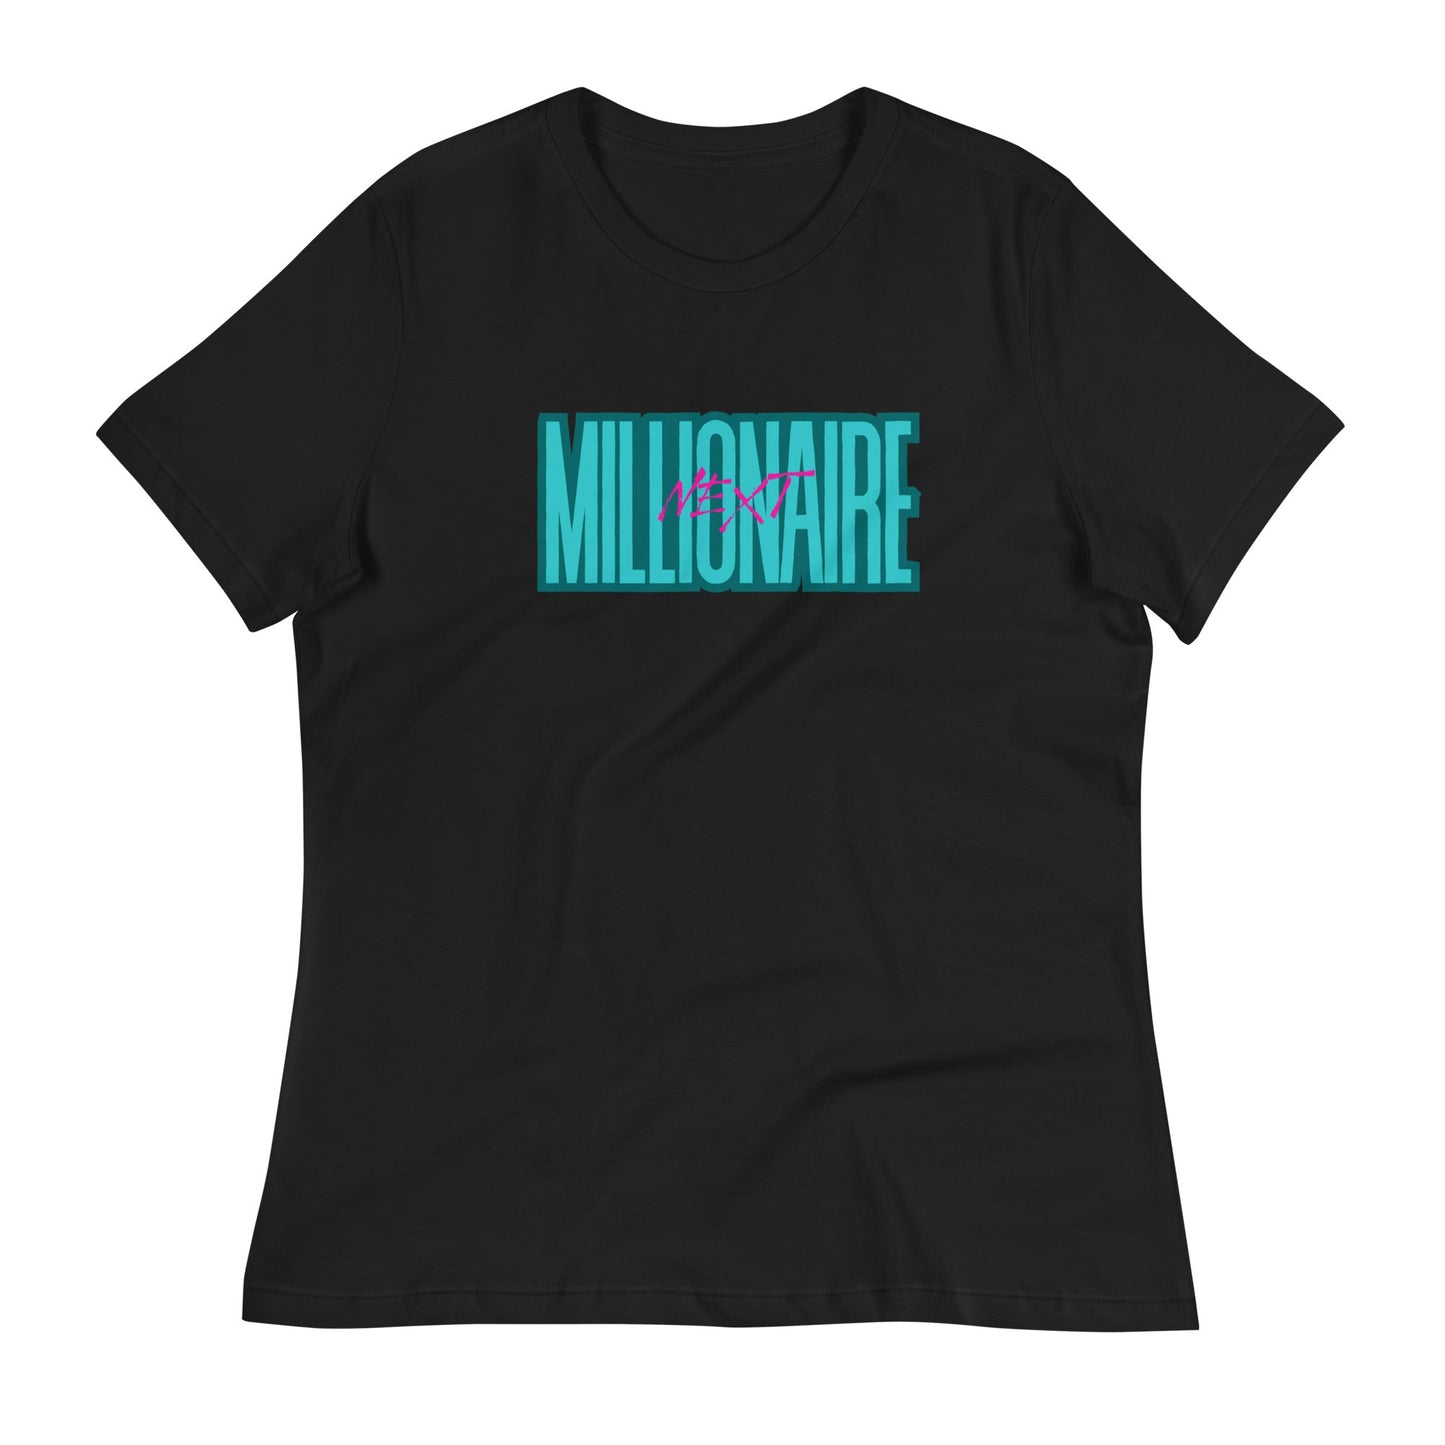 Next Millionaire Women's Relaxed T-Shirt - Catch This Tea Shirts